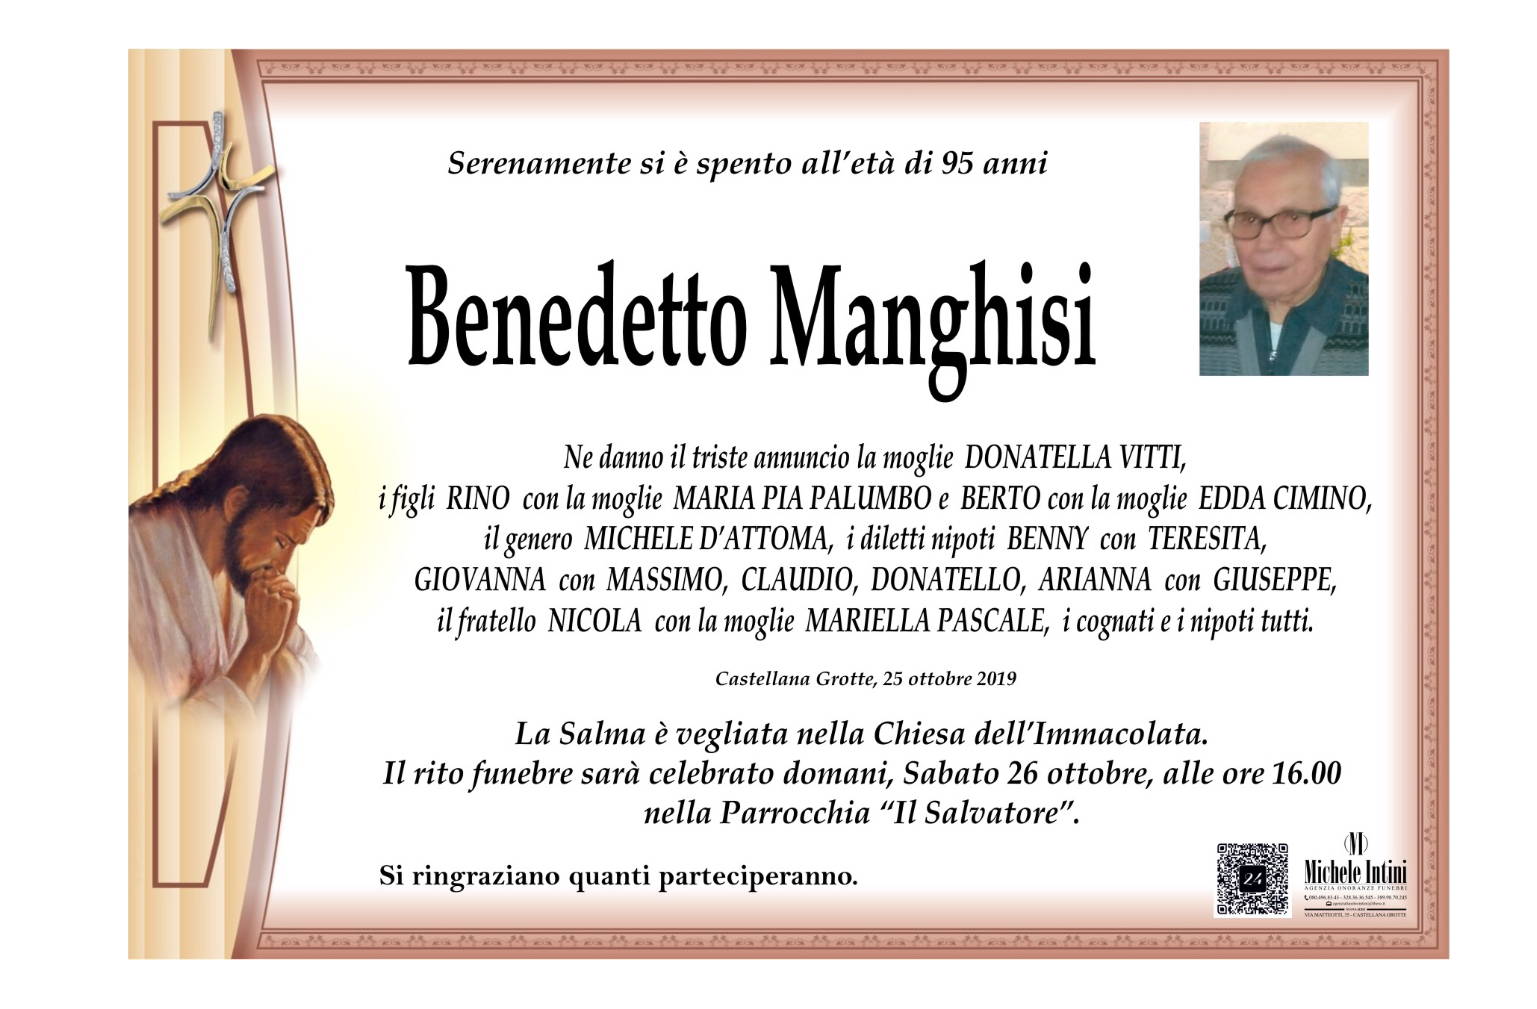 Benedetto Manghisi